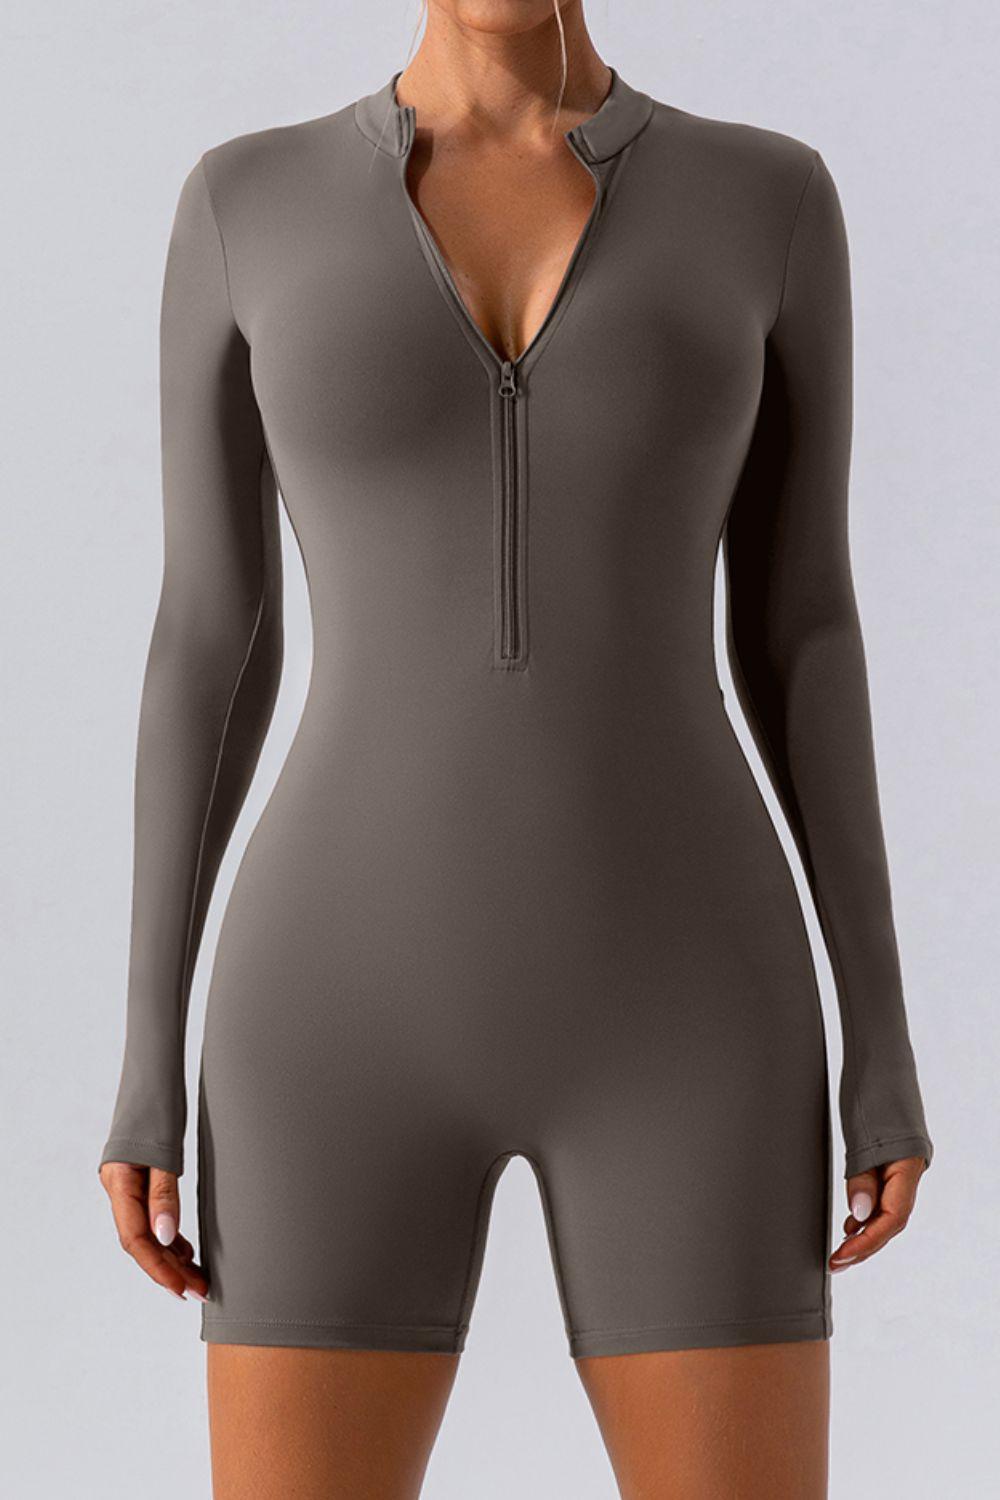 a woman in a bodysuit with a zipper